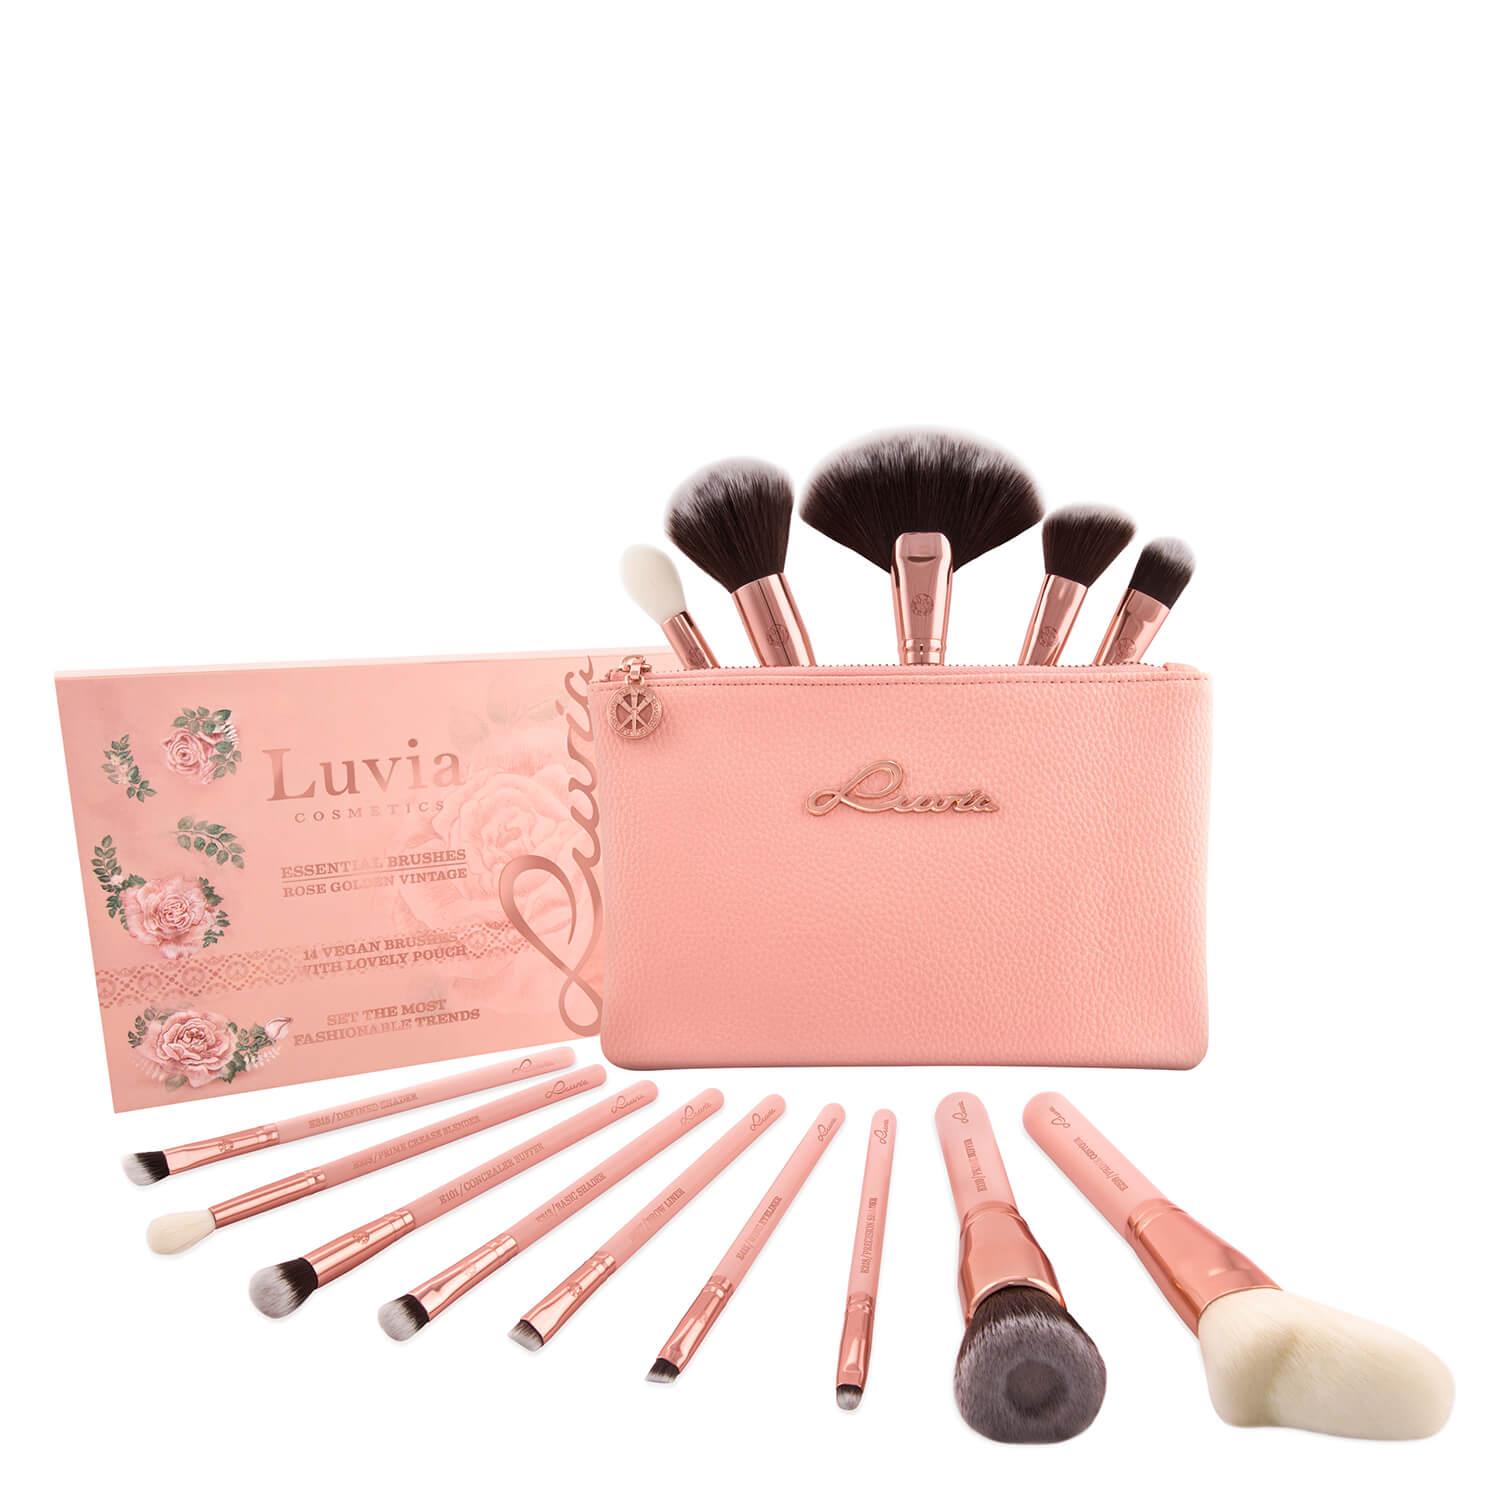 Luvia Cosmetics - Essential Brushes Rose Golden Vintage